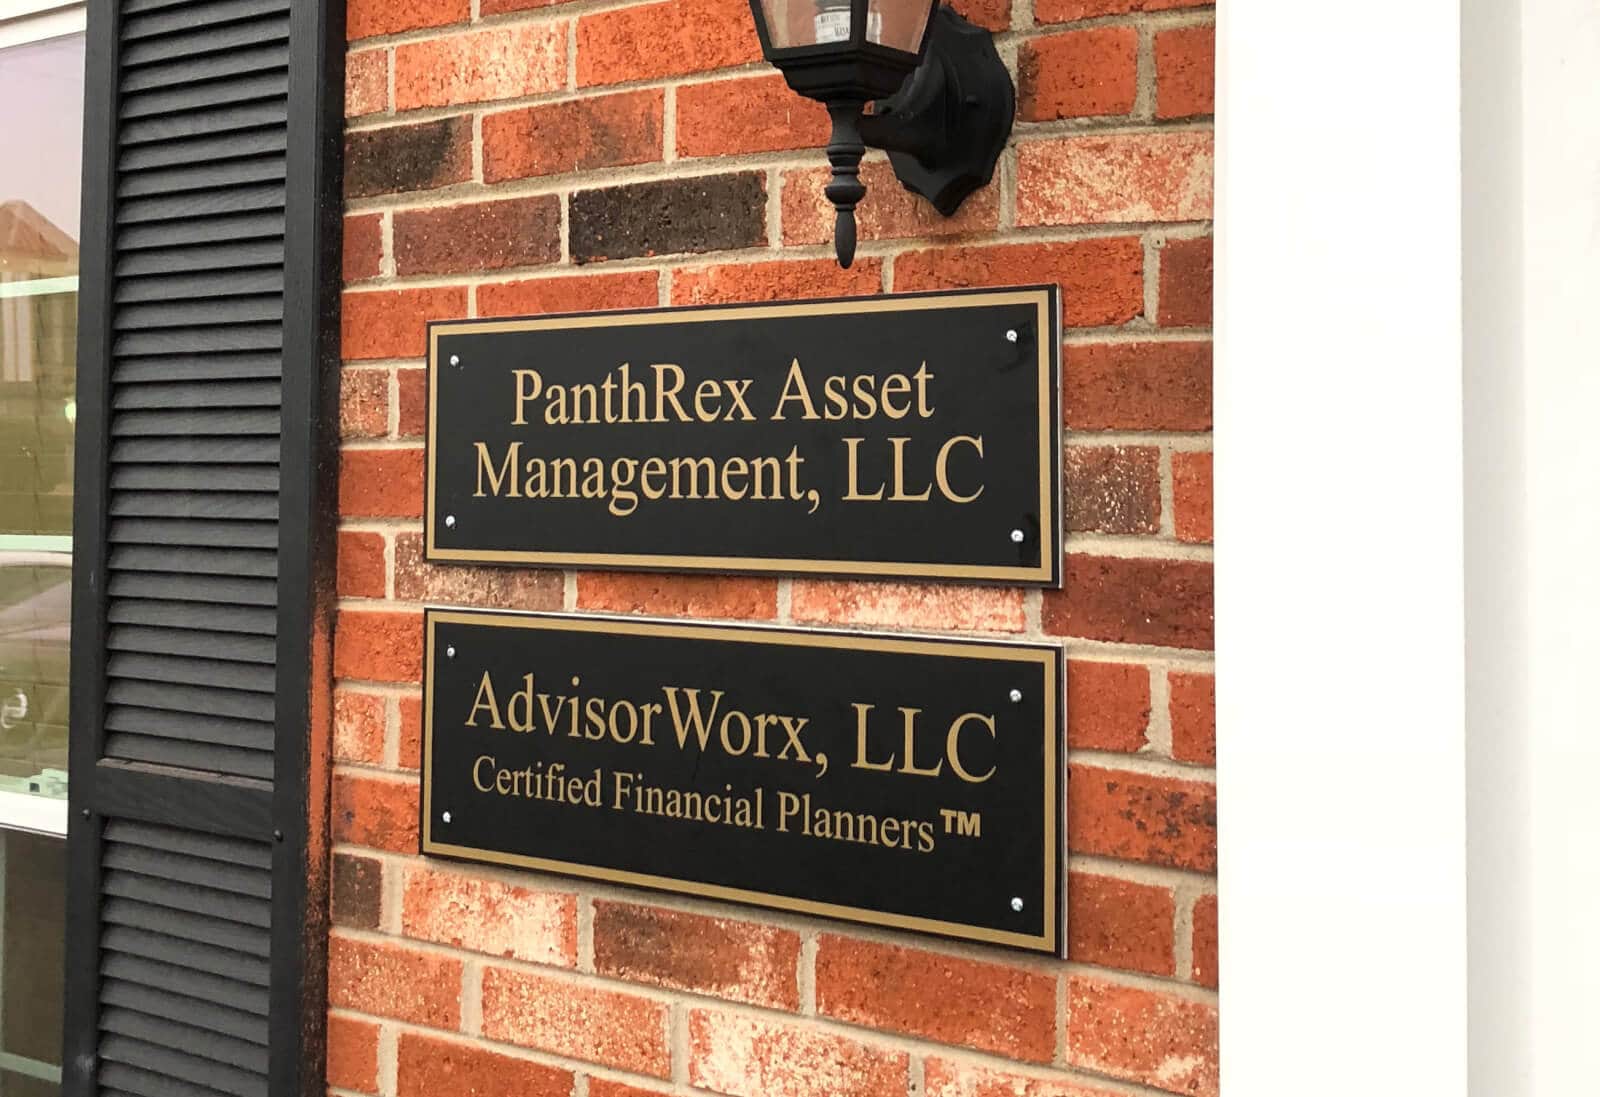 Custom name plaques for PanthRex Asset Management and AdvisorWorx. 12-Point SignWorks - Franklin, TN